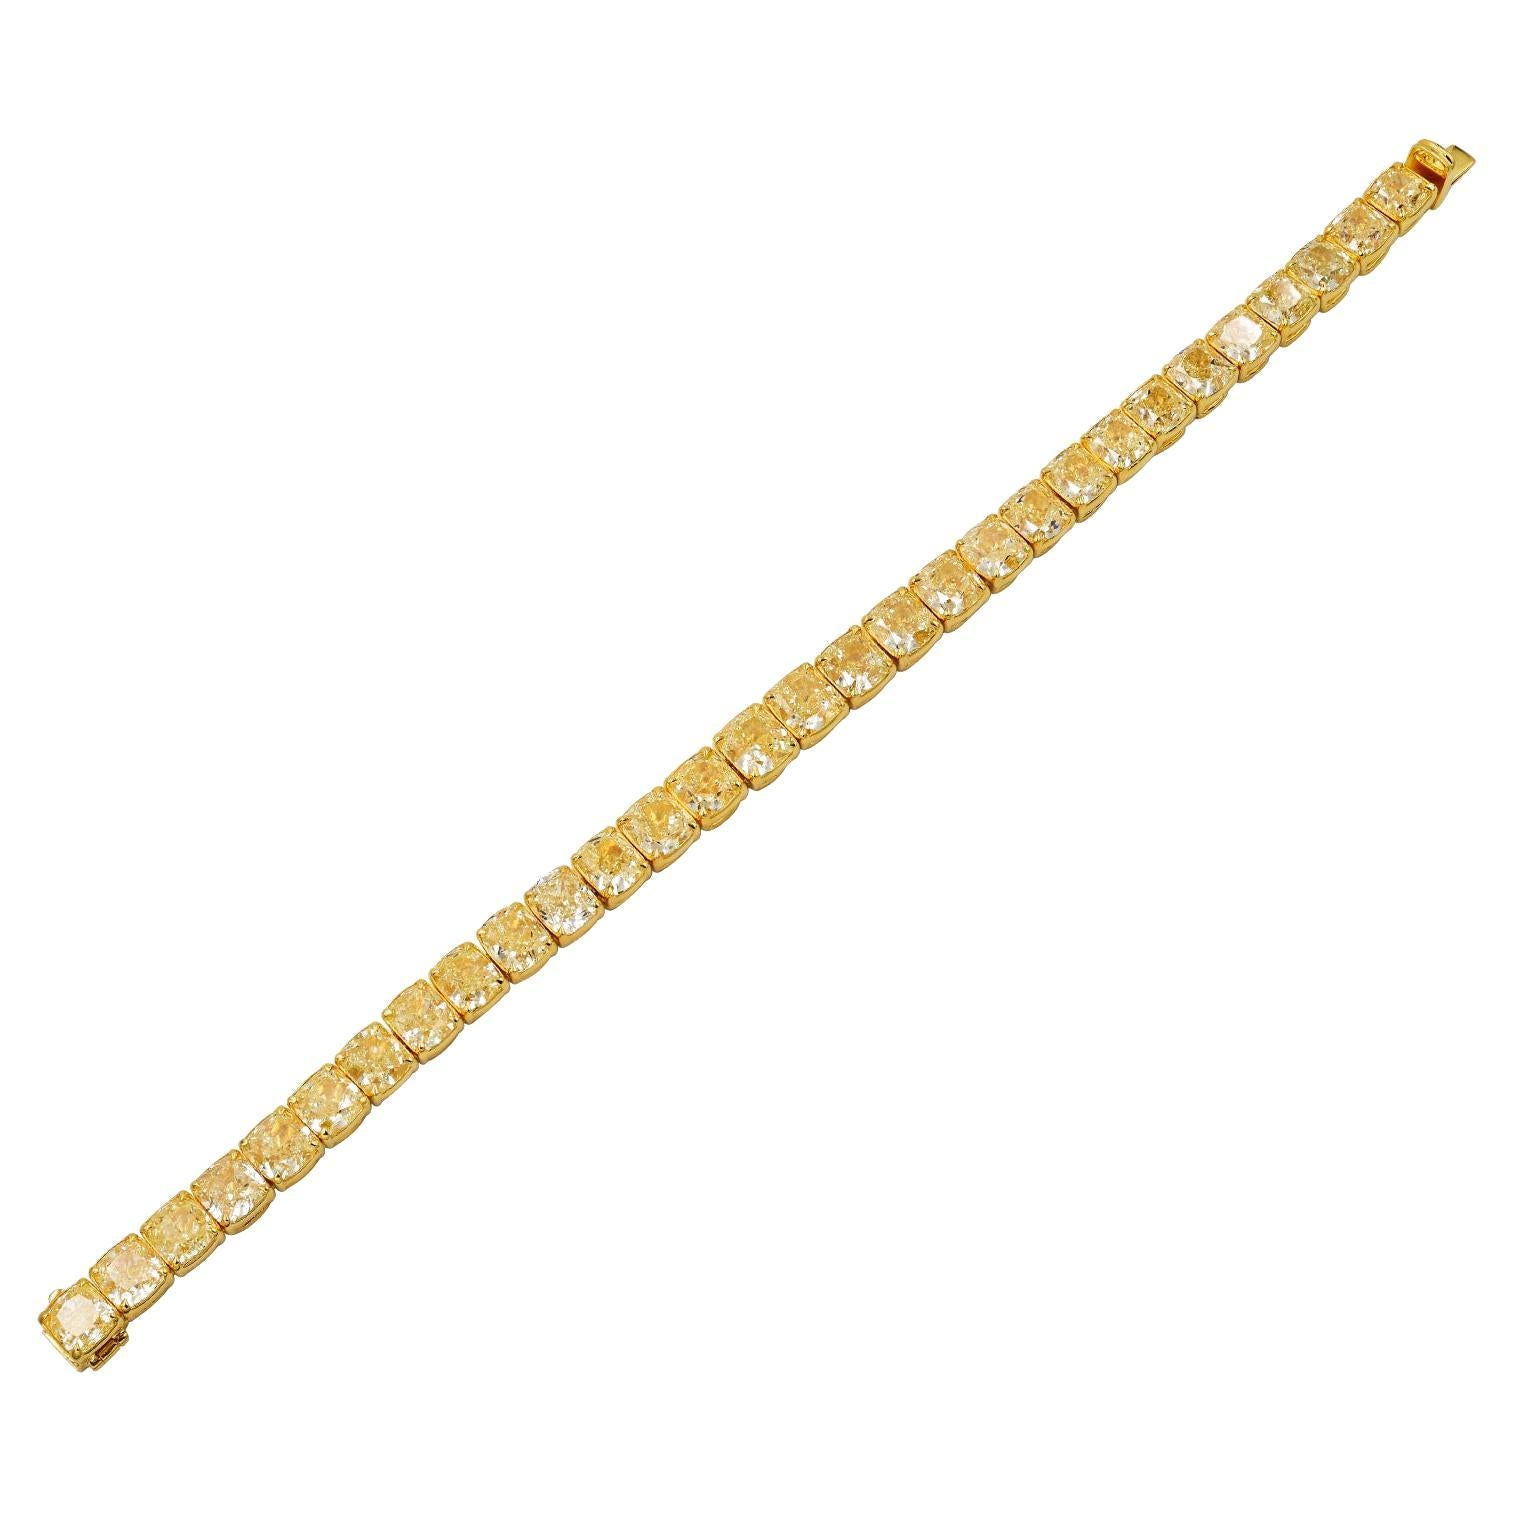 Spectra Fine Jewelry 32.83 Carat Yellow Diamond Bracelet For Sale